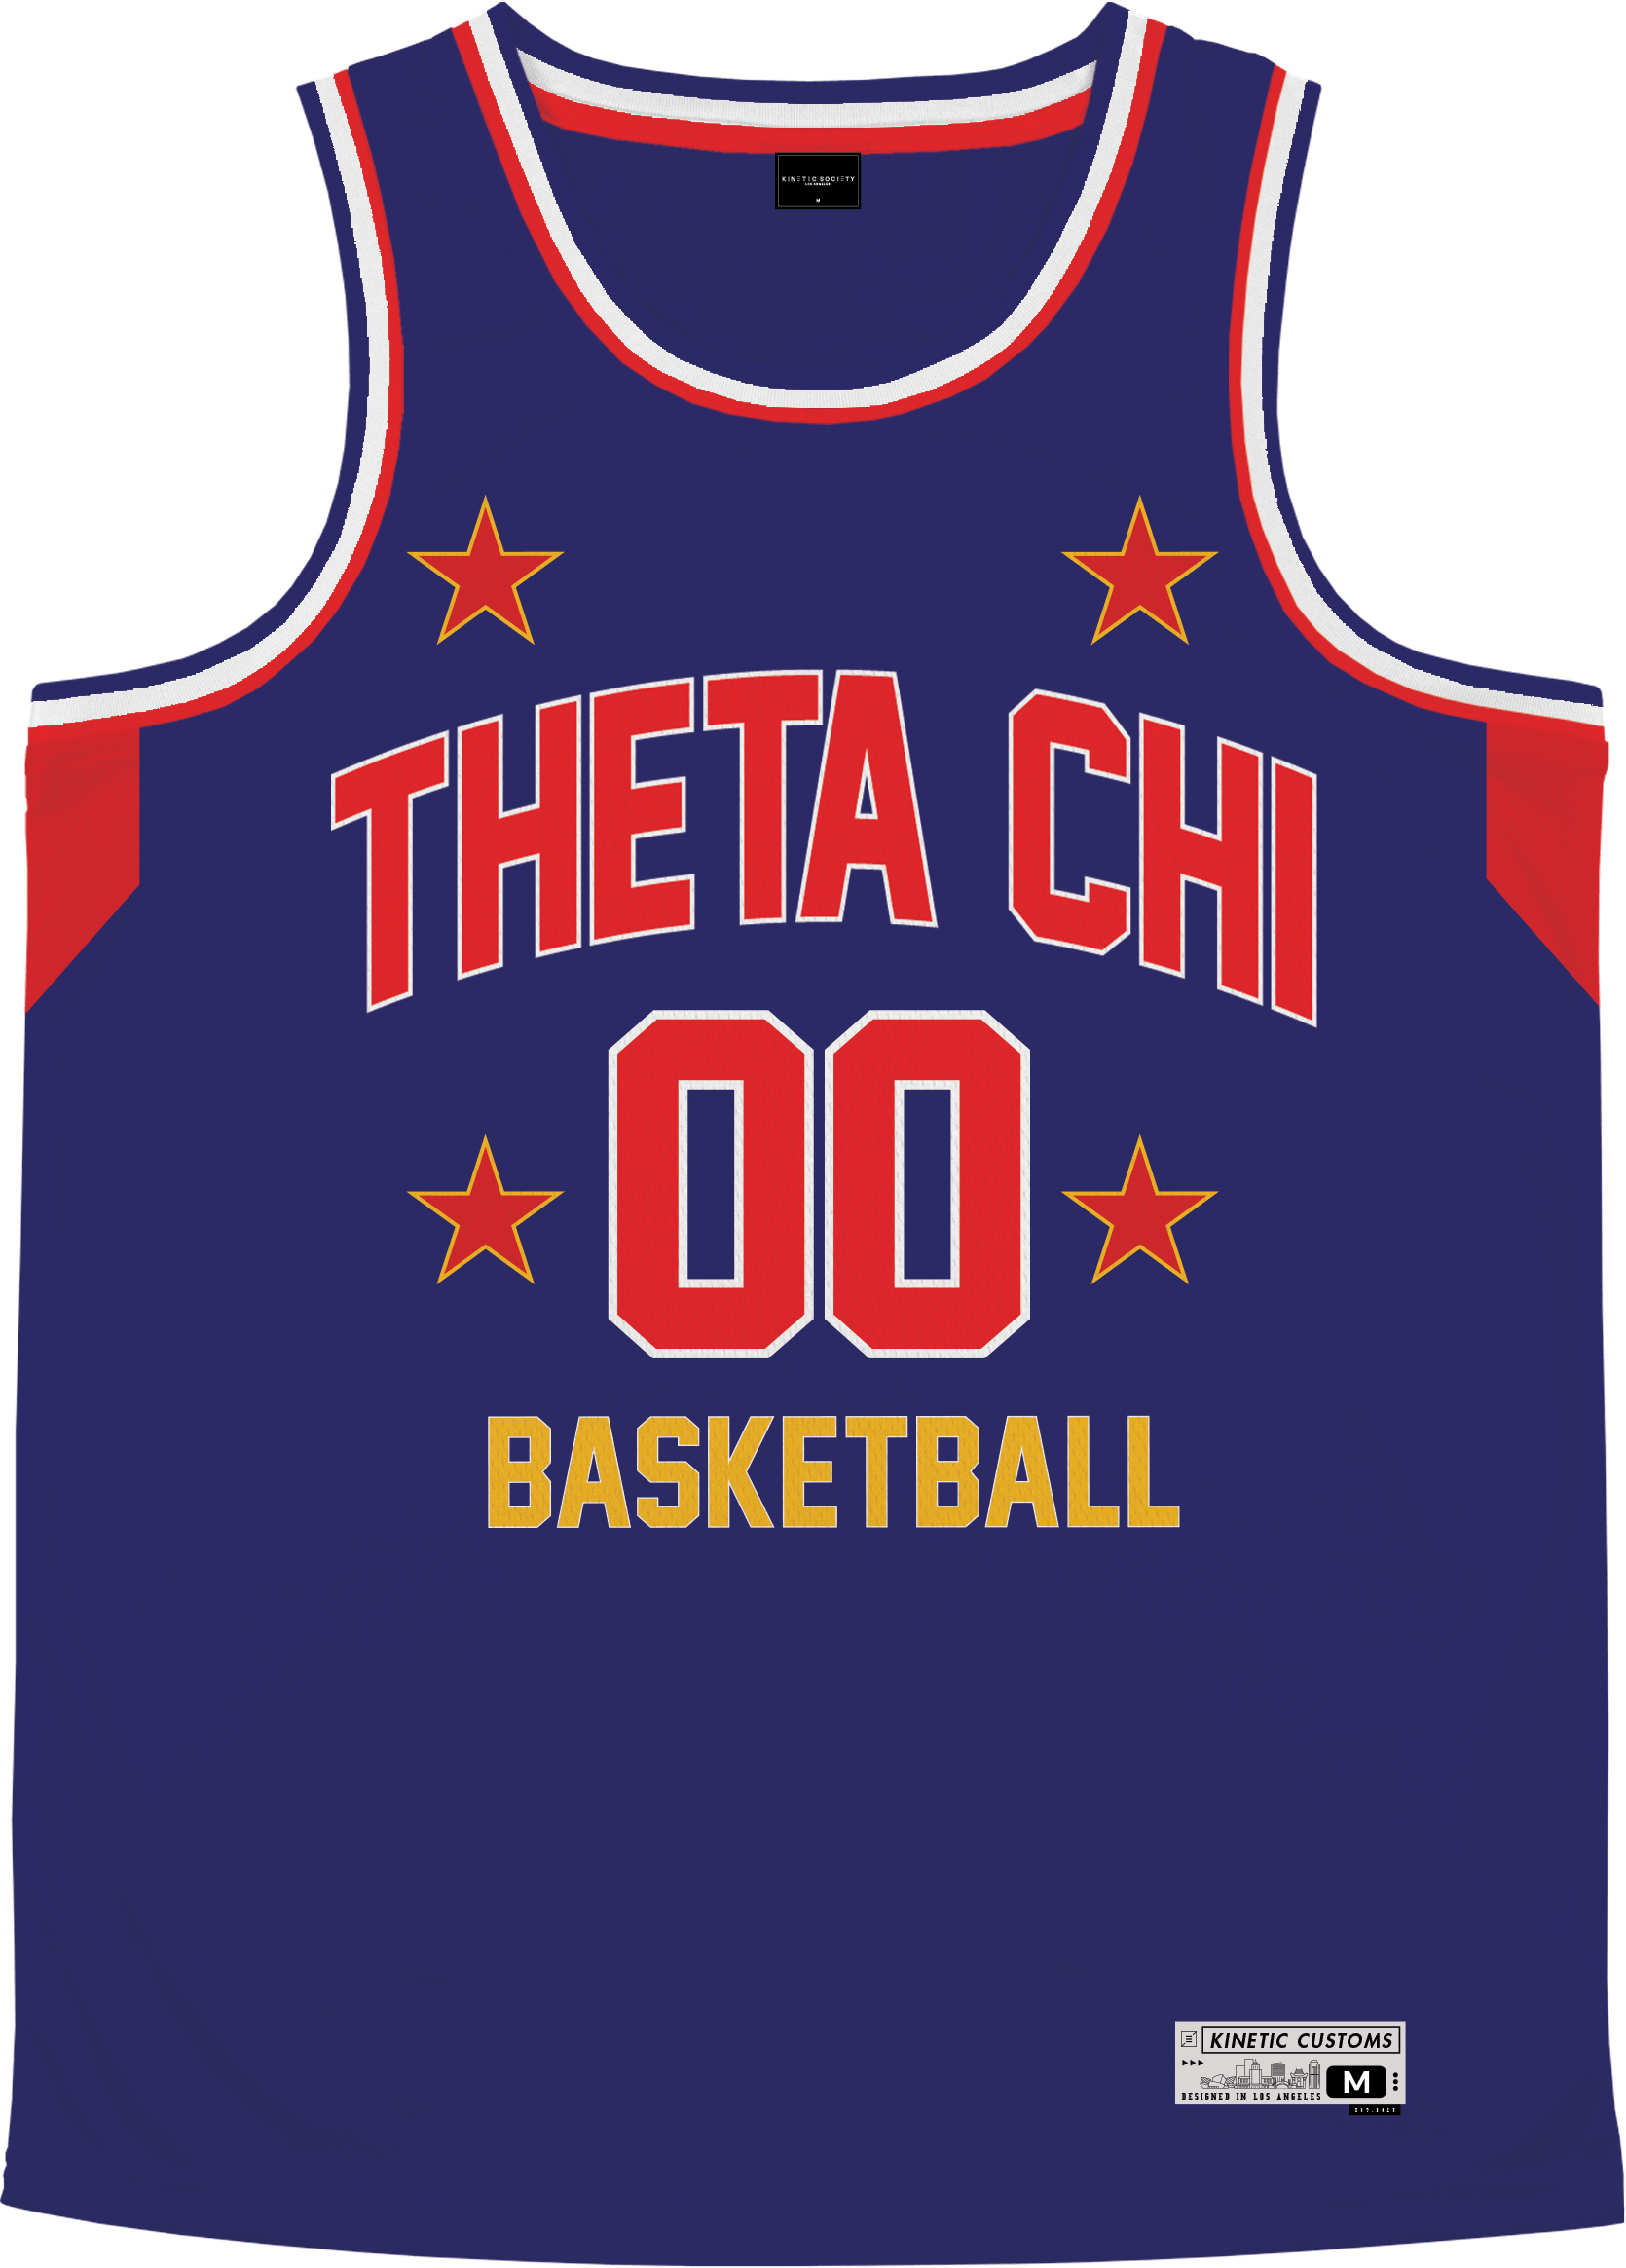 Theta Chi - Retro Ballers Basketball Jersey - Kinetic Society